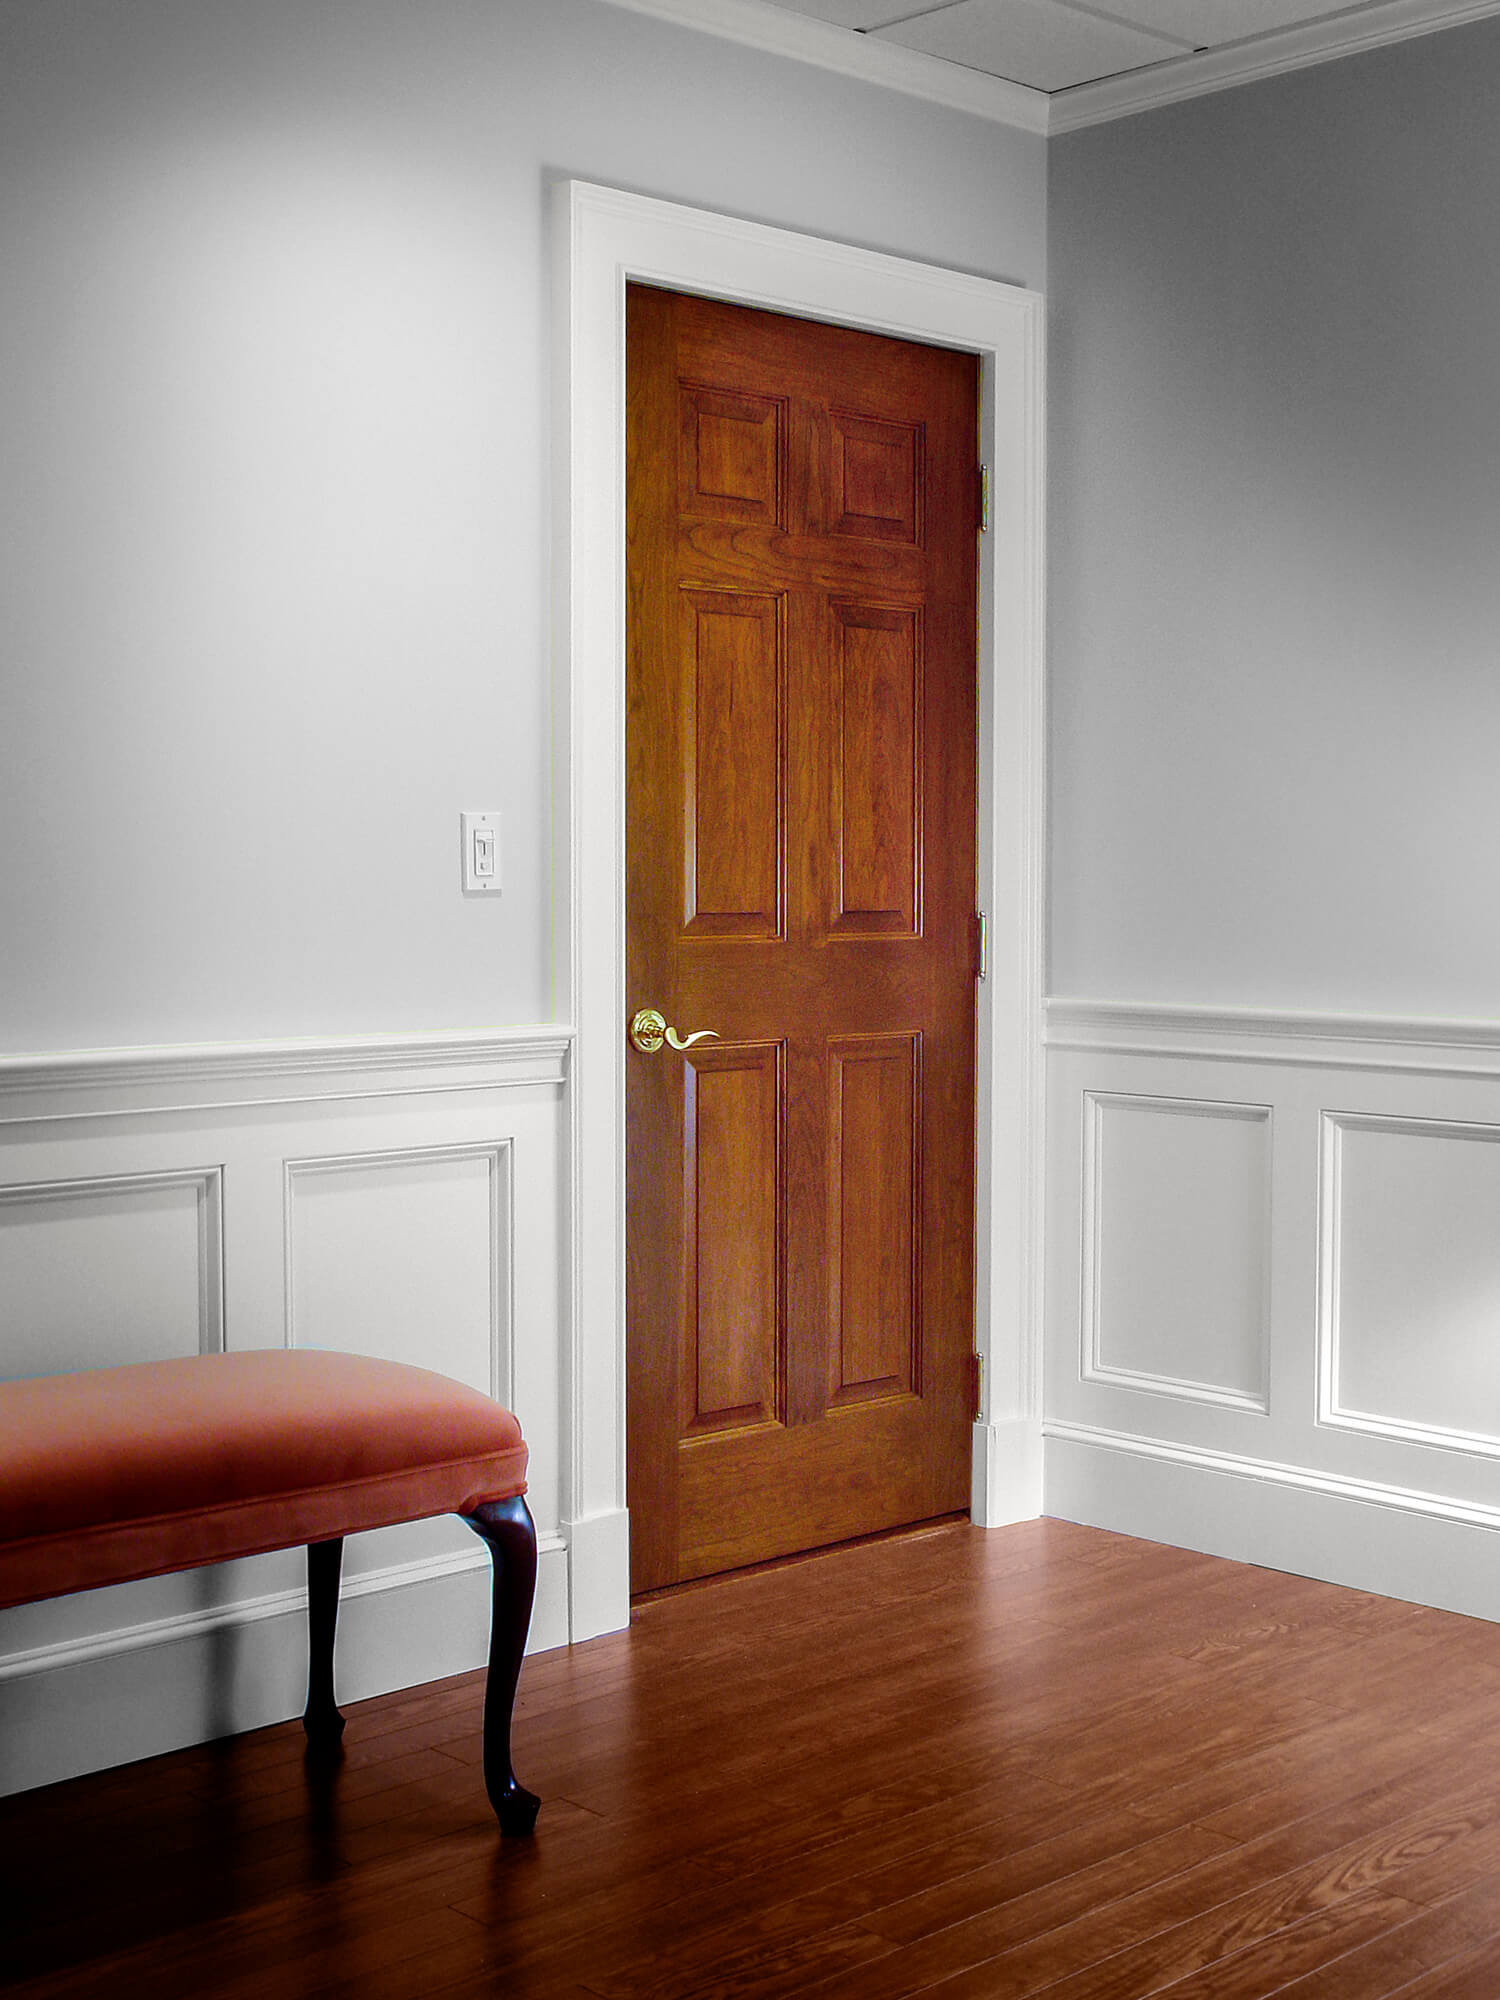 Photo of a 6 Panel Captiva Interior Door